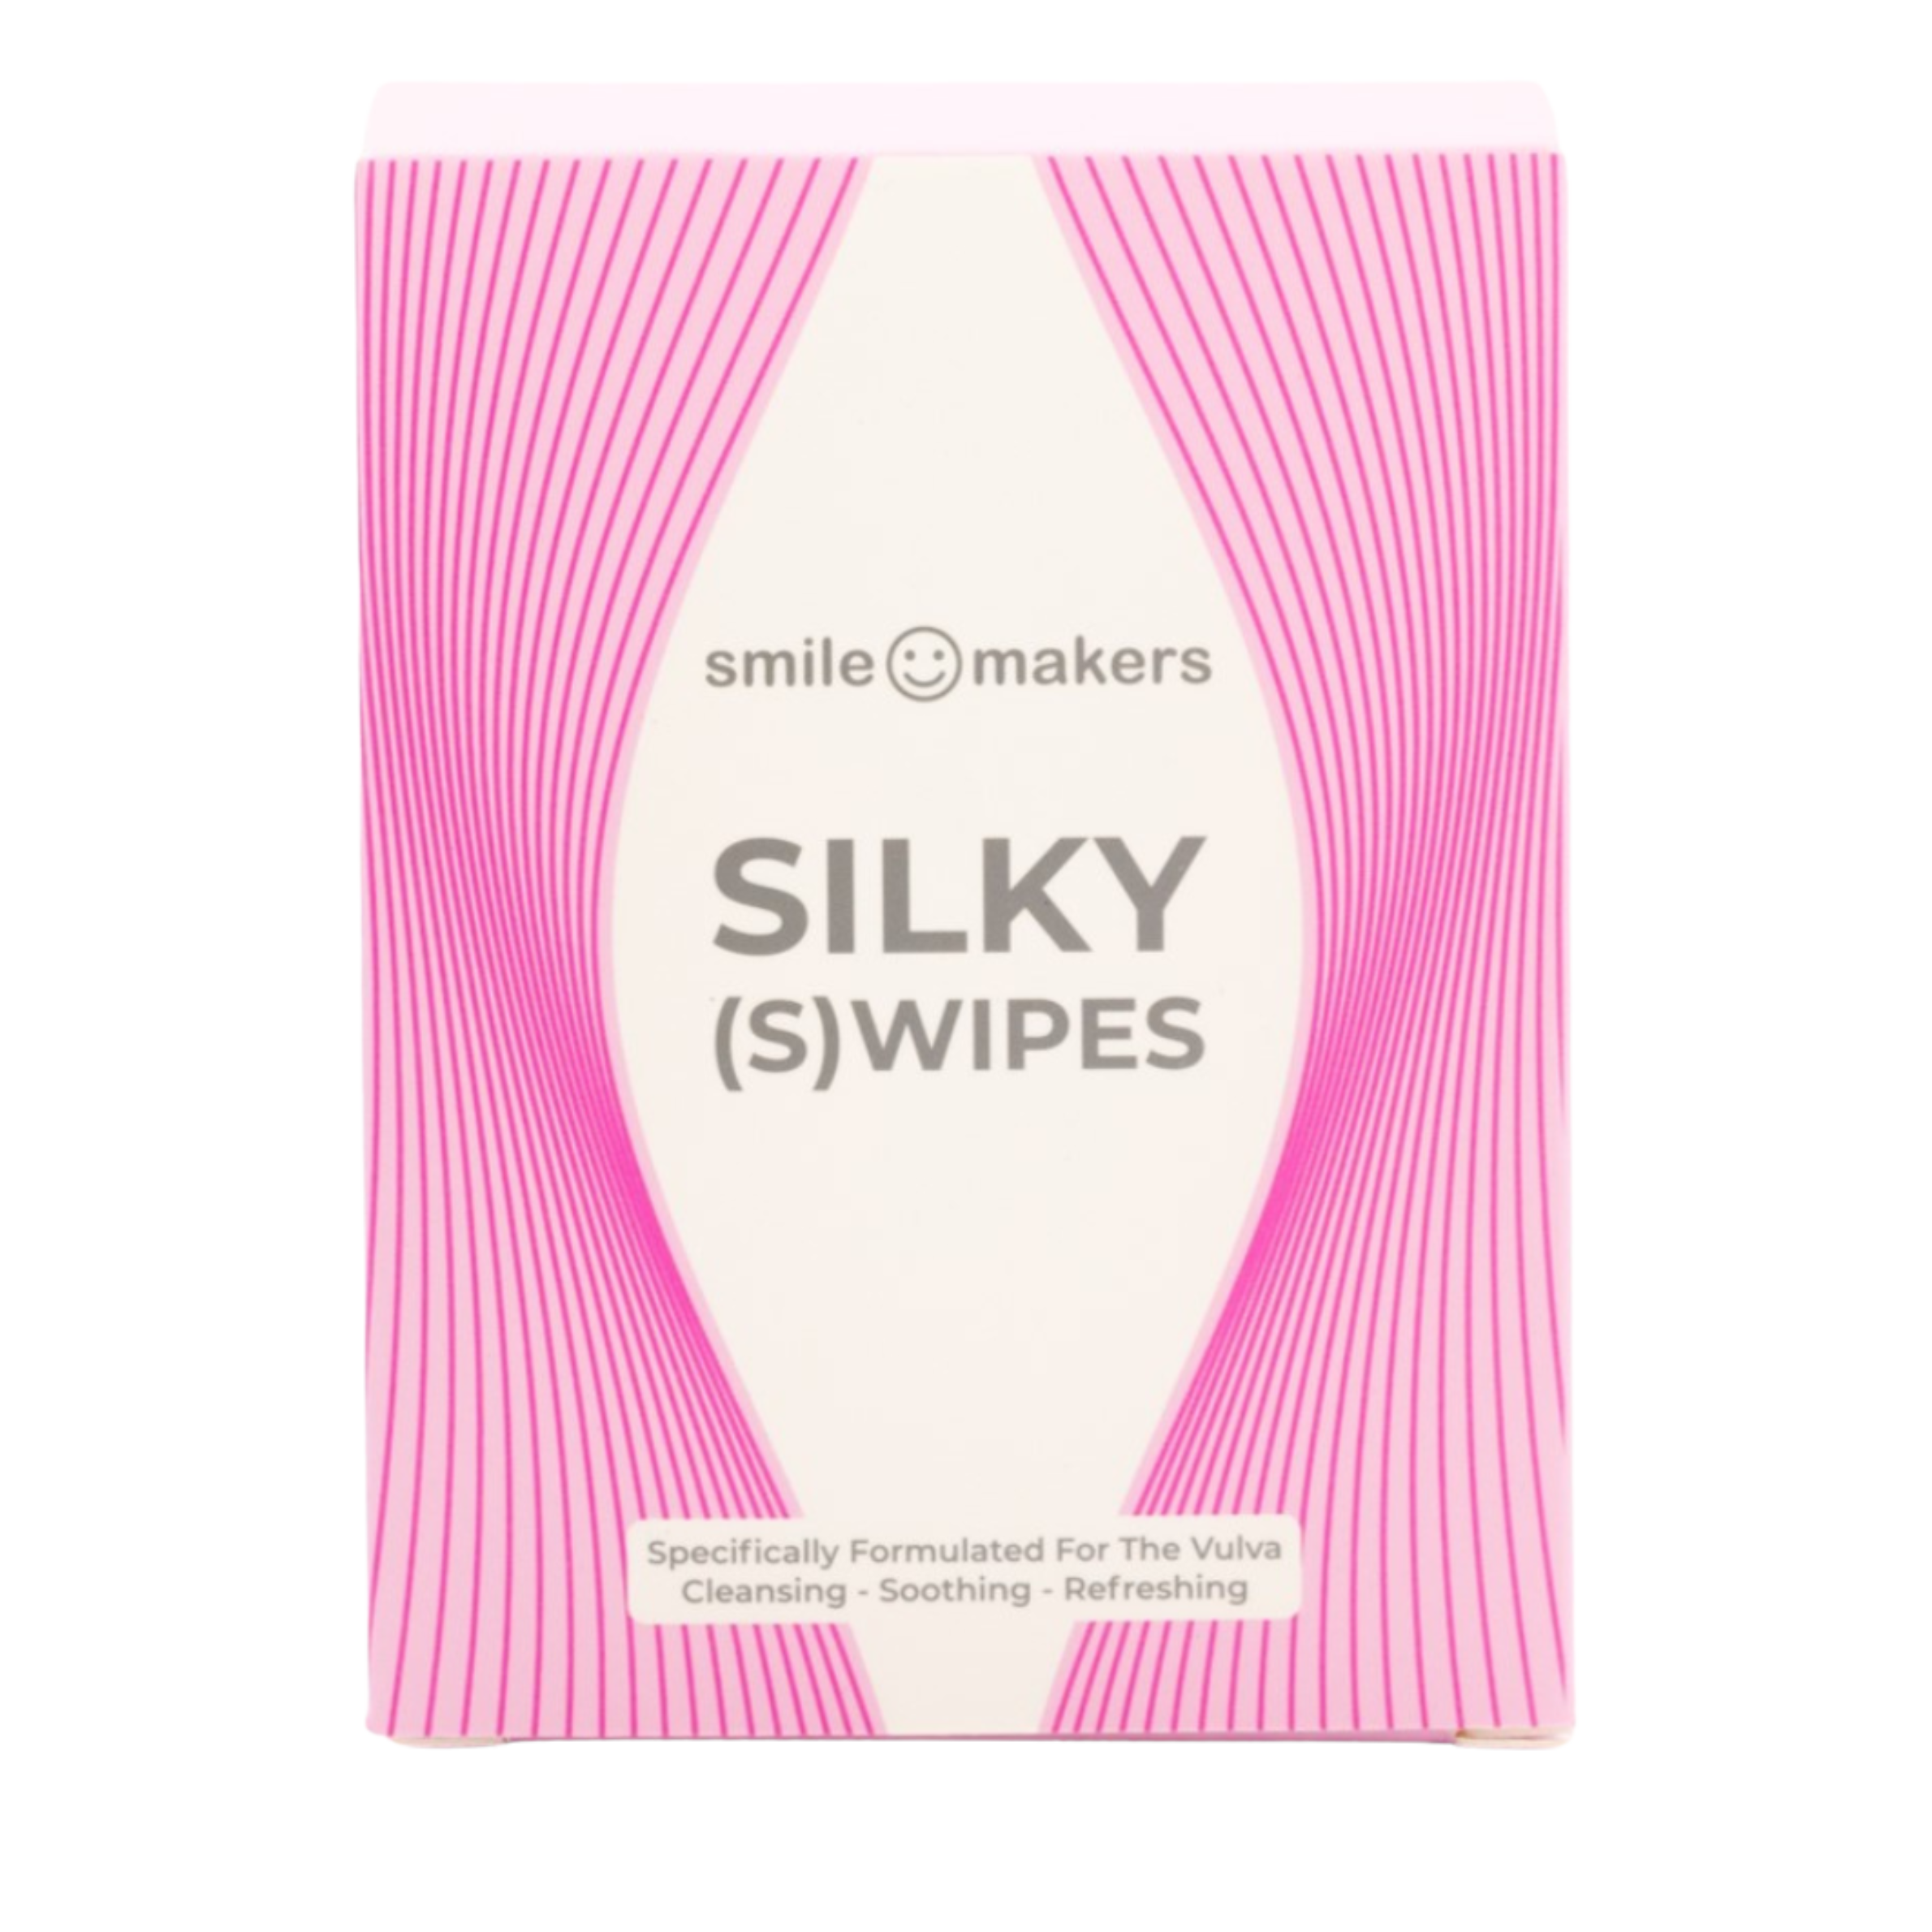 Silky Swipes